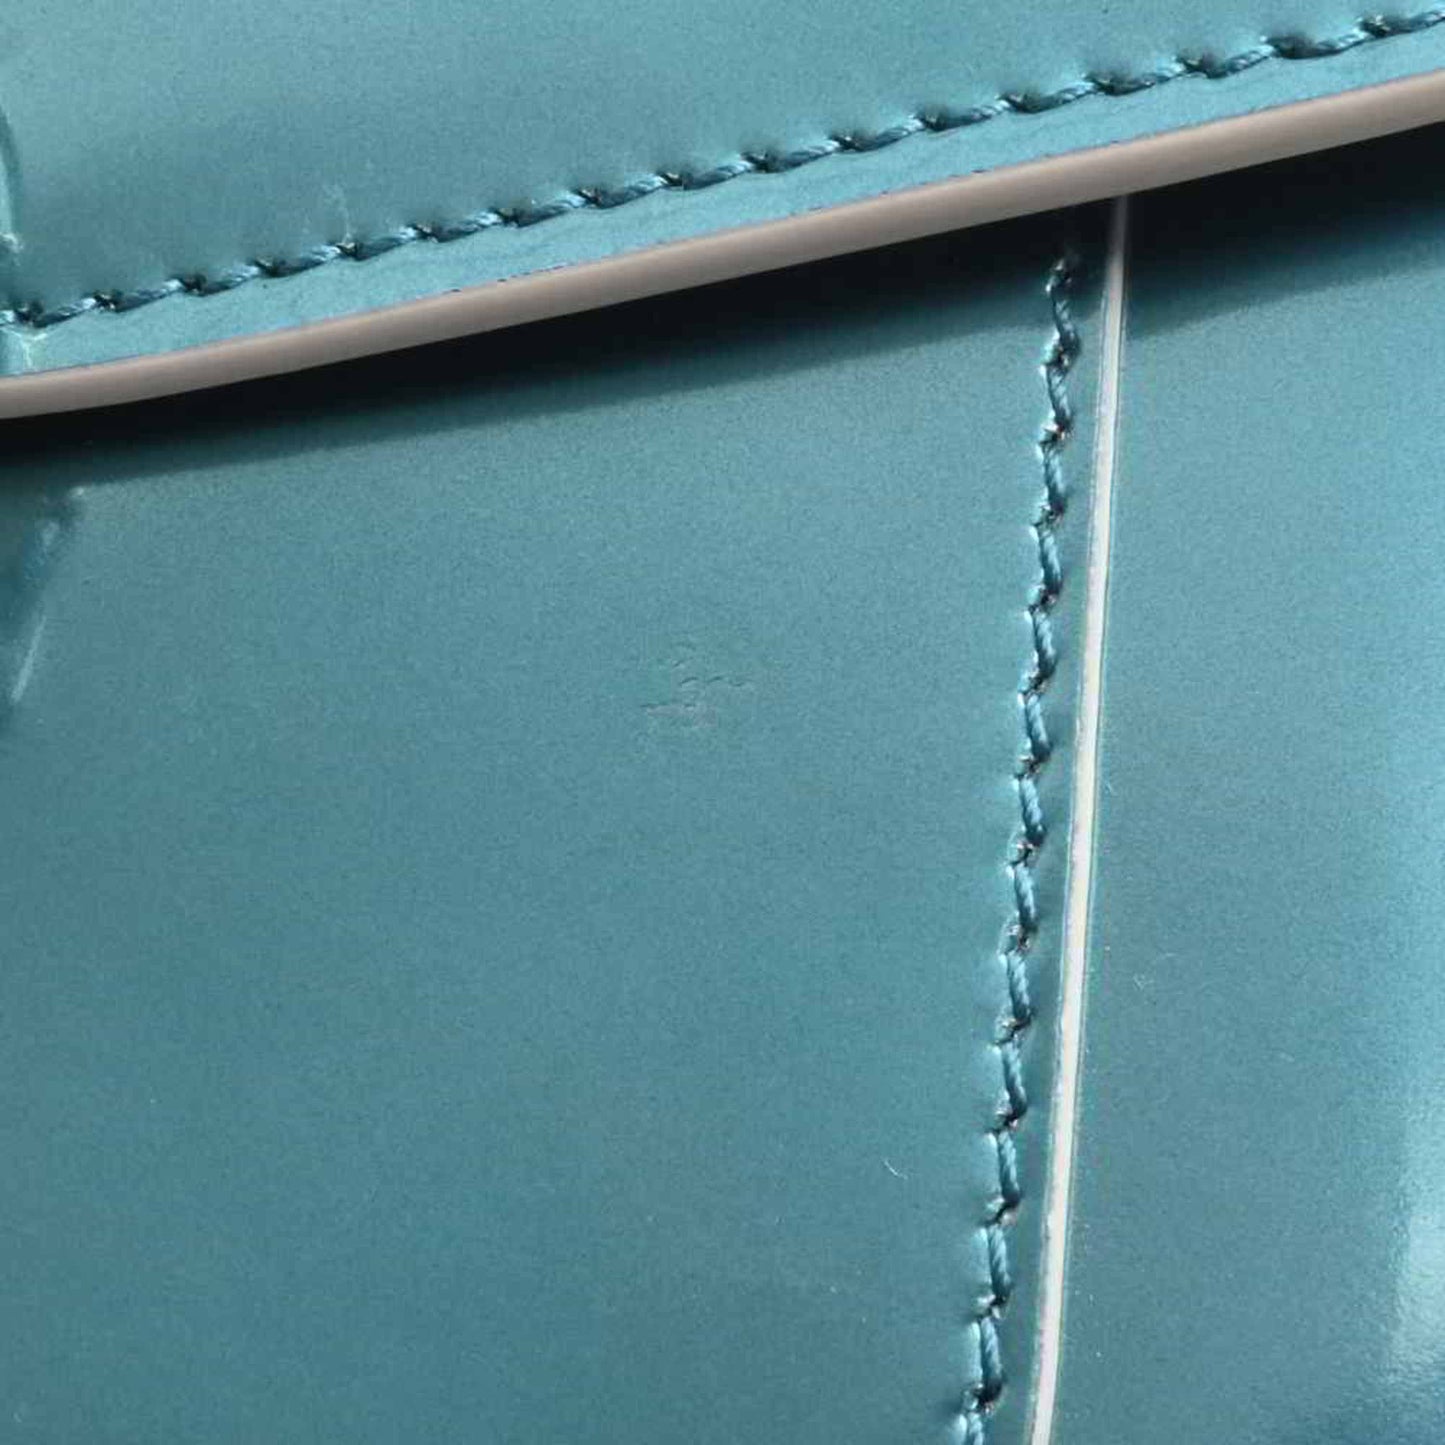 Bulgari Serpenti Forever Handbag Patent Leather